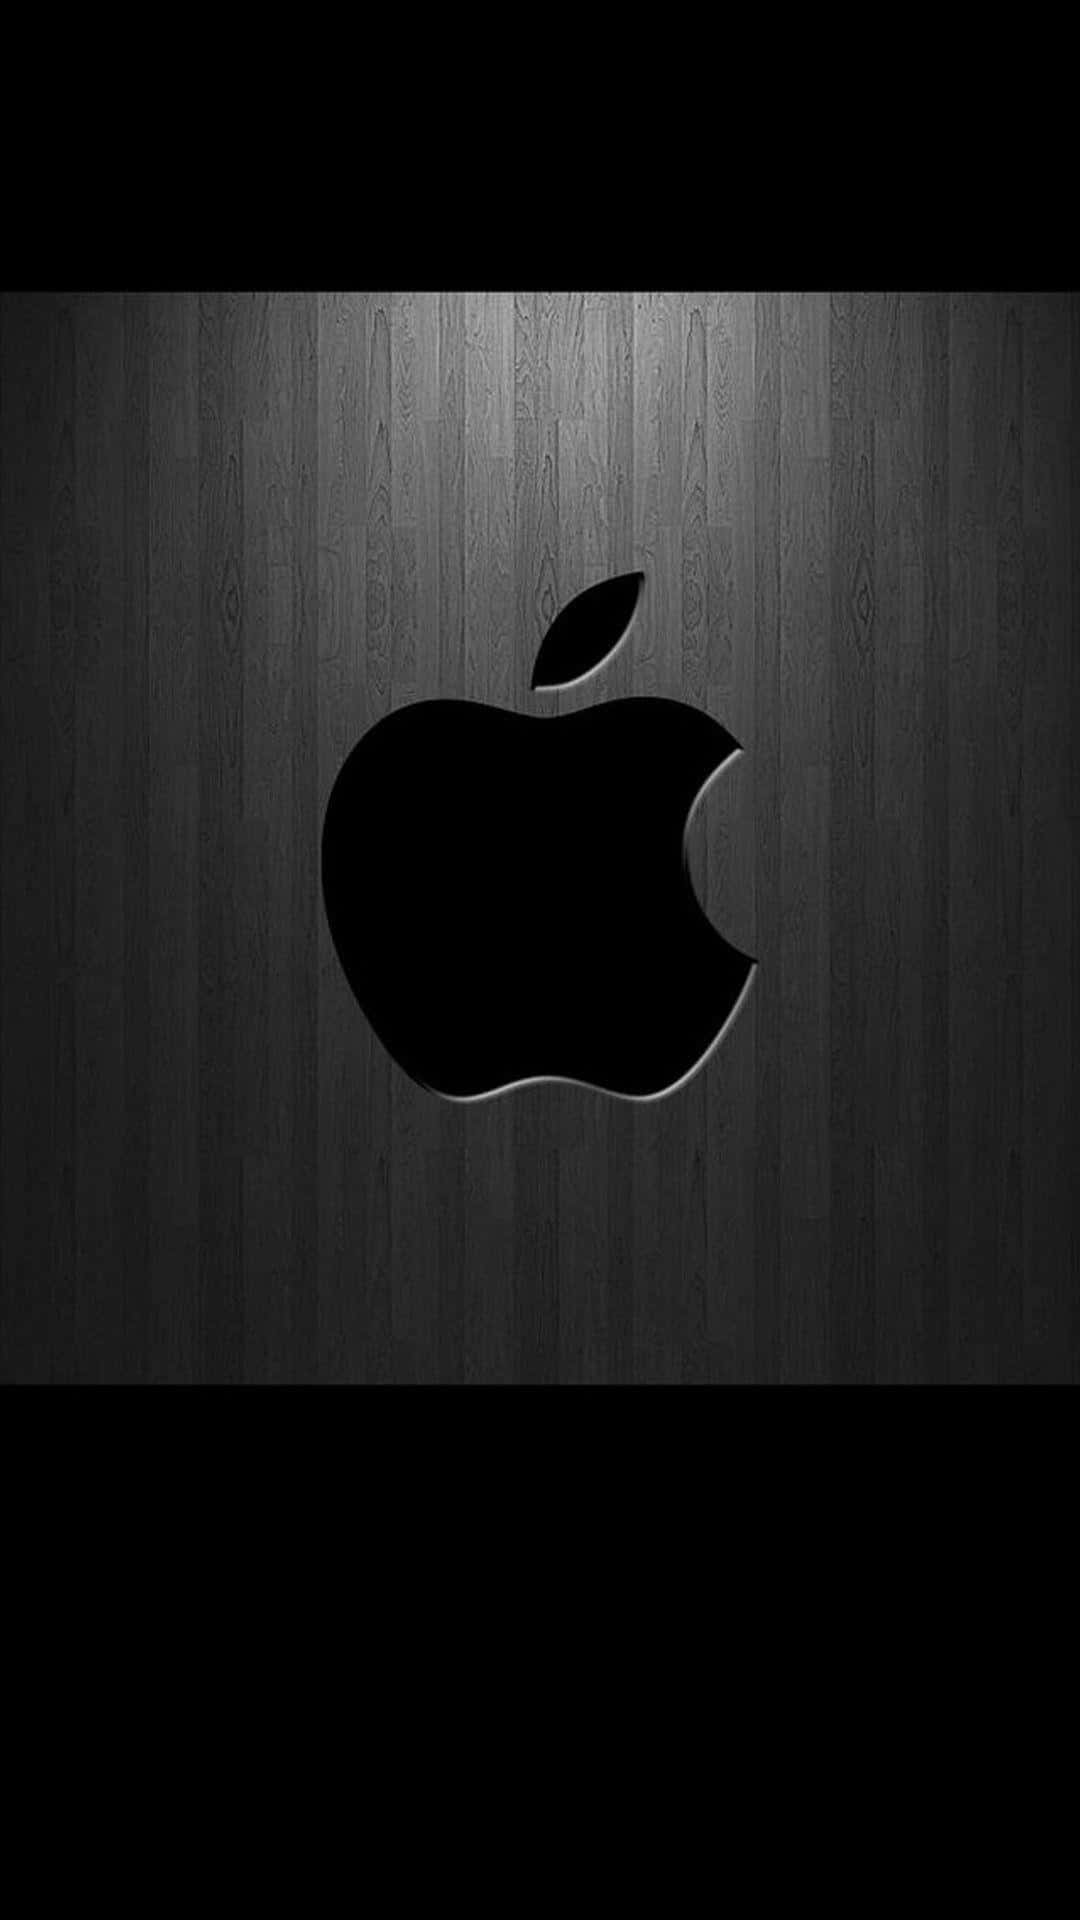 Sort Apple-logo 1080 X 1920 Wallpaper